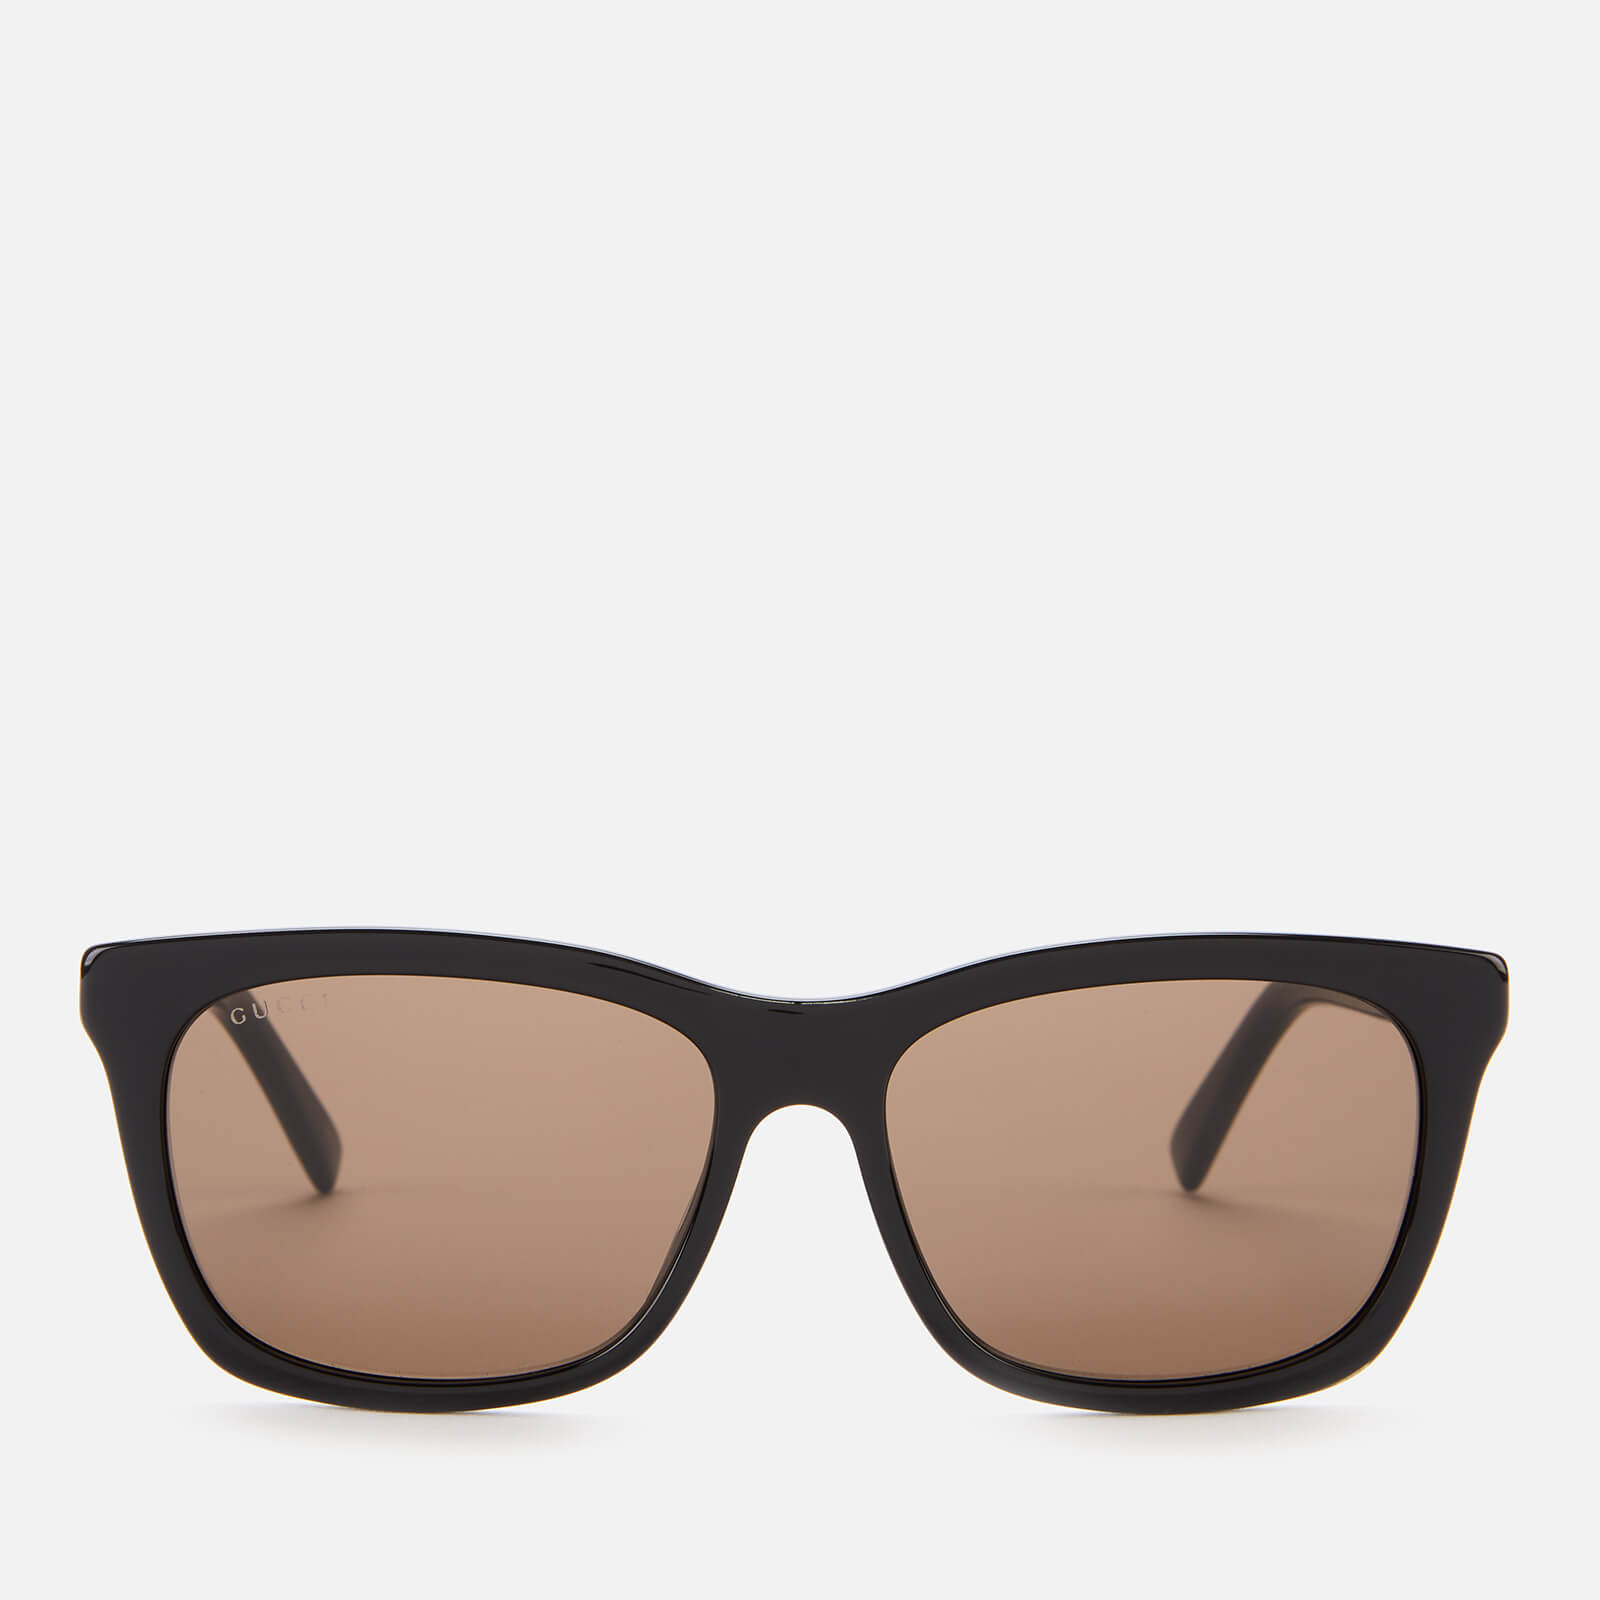 Gucci Men's Rectangle Frame Acetate Sunglasses - Black/Gold/Brown